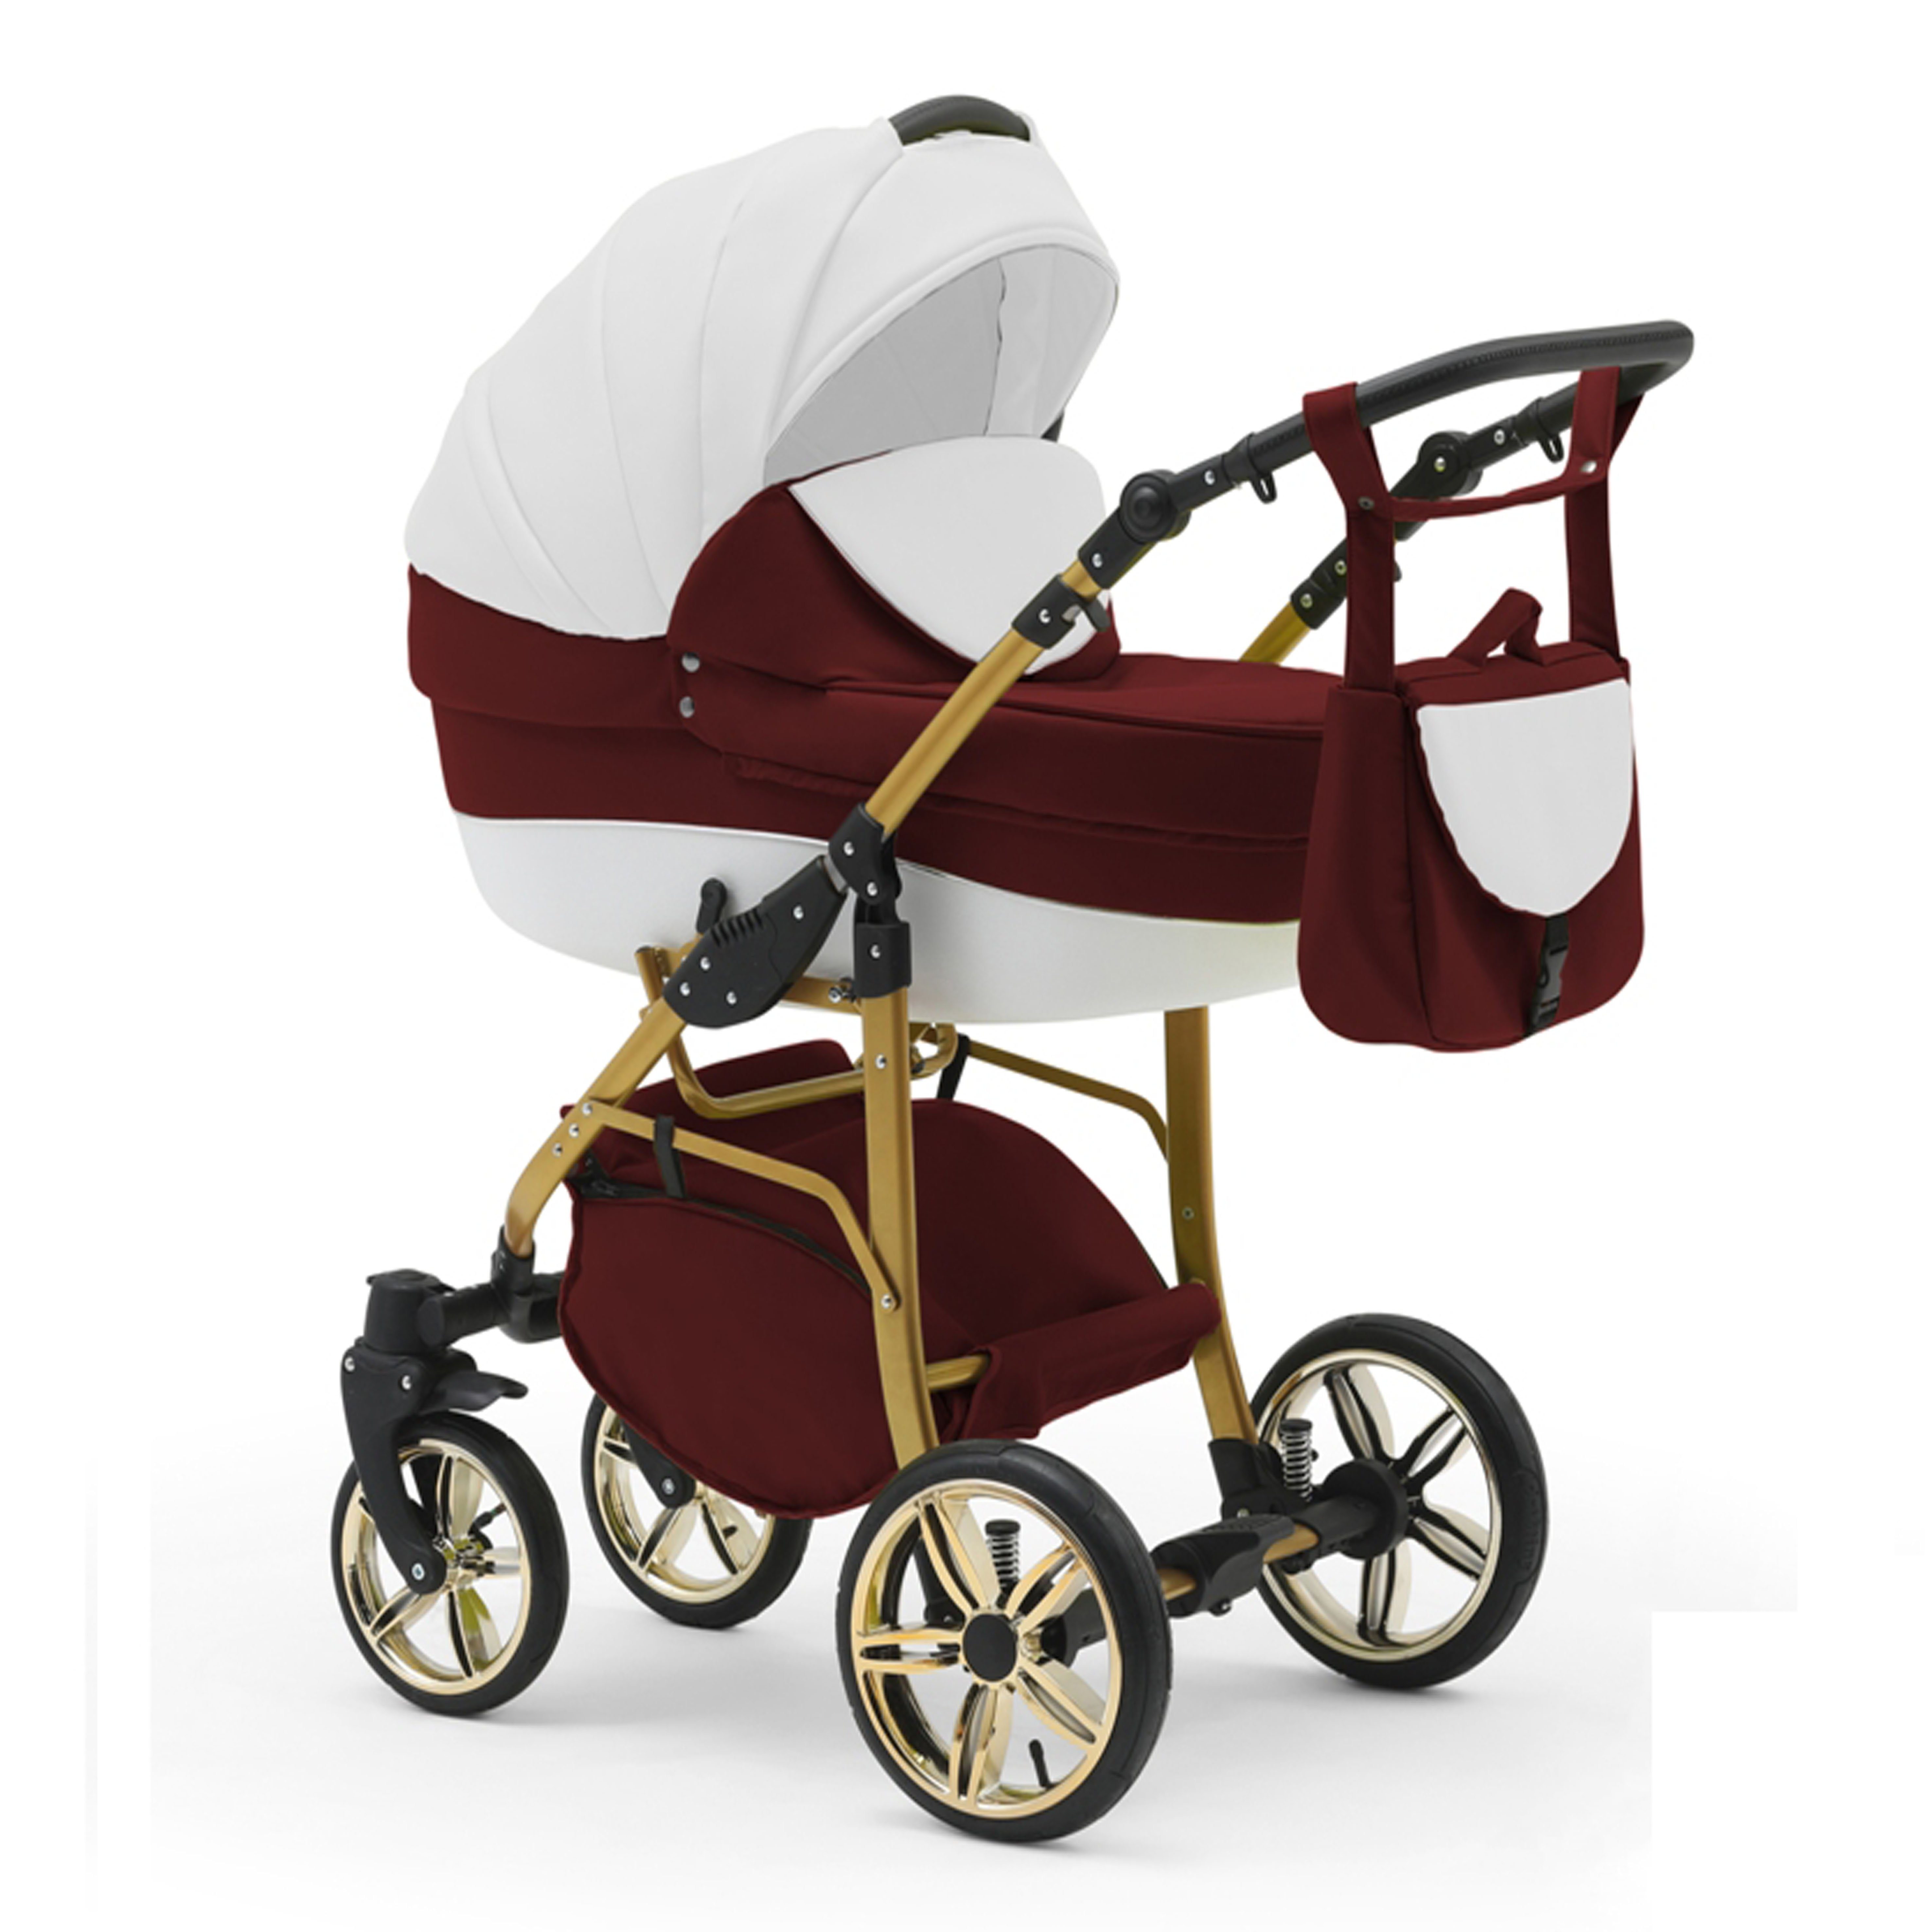 Kinderwagen-Set Cosmo Weiß-Bordeaux-Weiß Gold Teile ECO in - 46 13 Kombi-Kinderwagen 1 - 2 babies-on-wheels in Farben